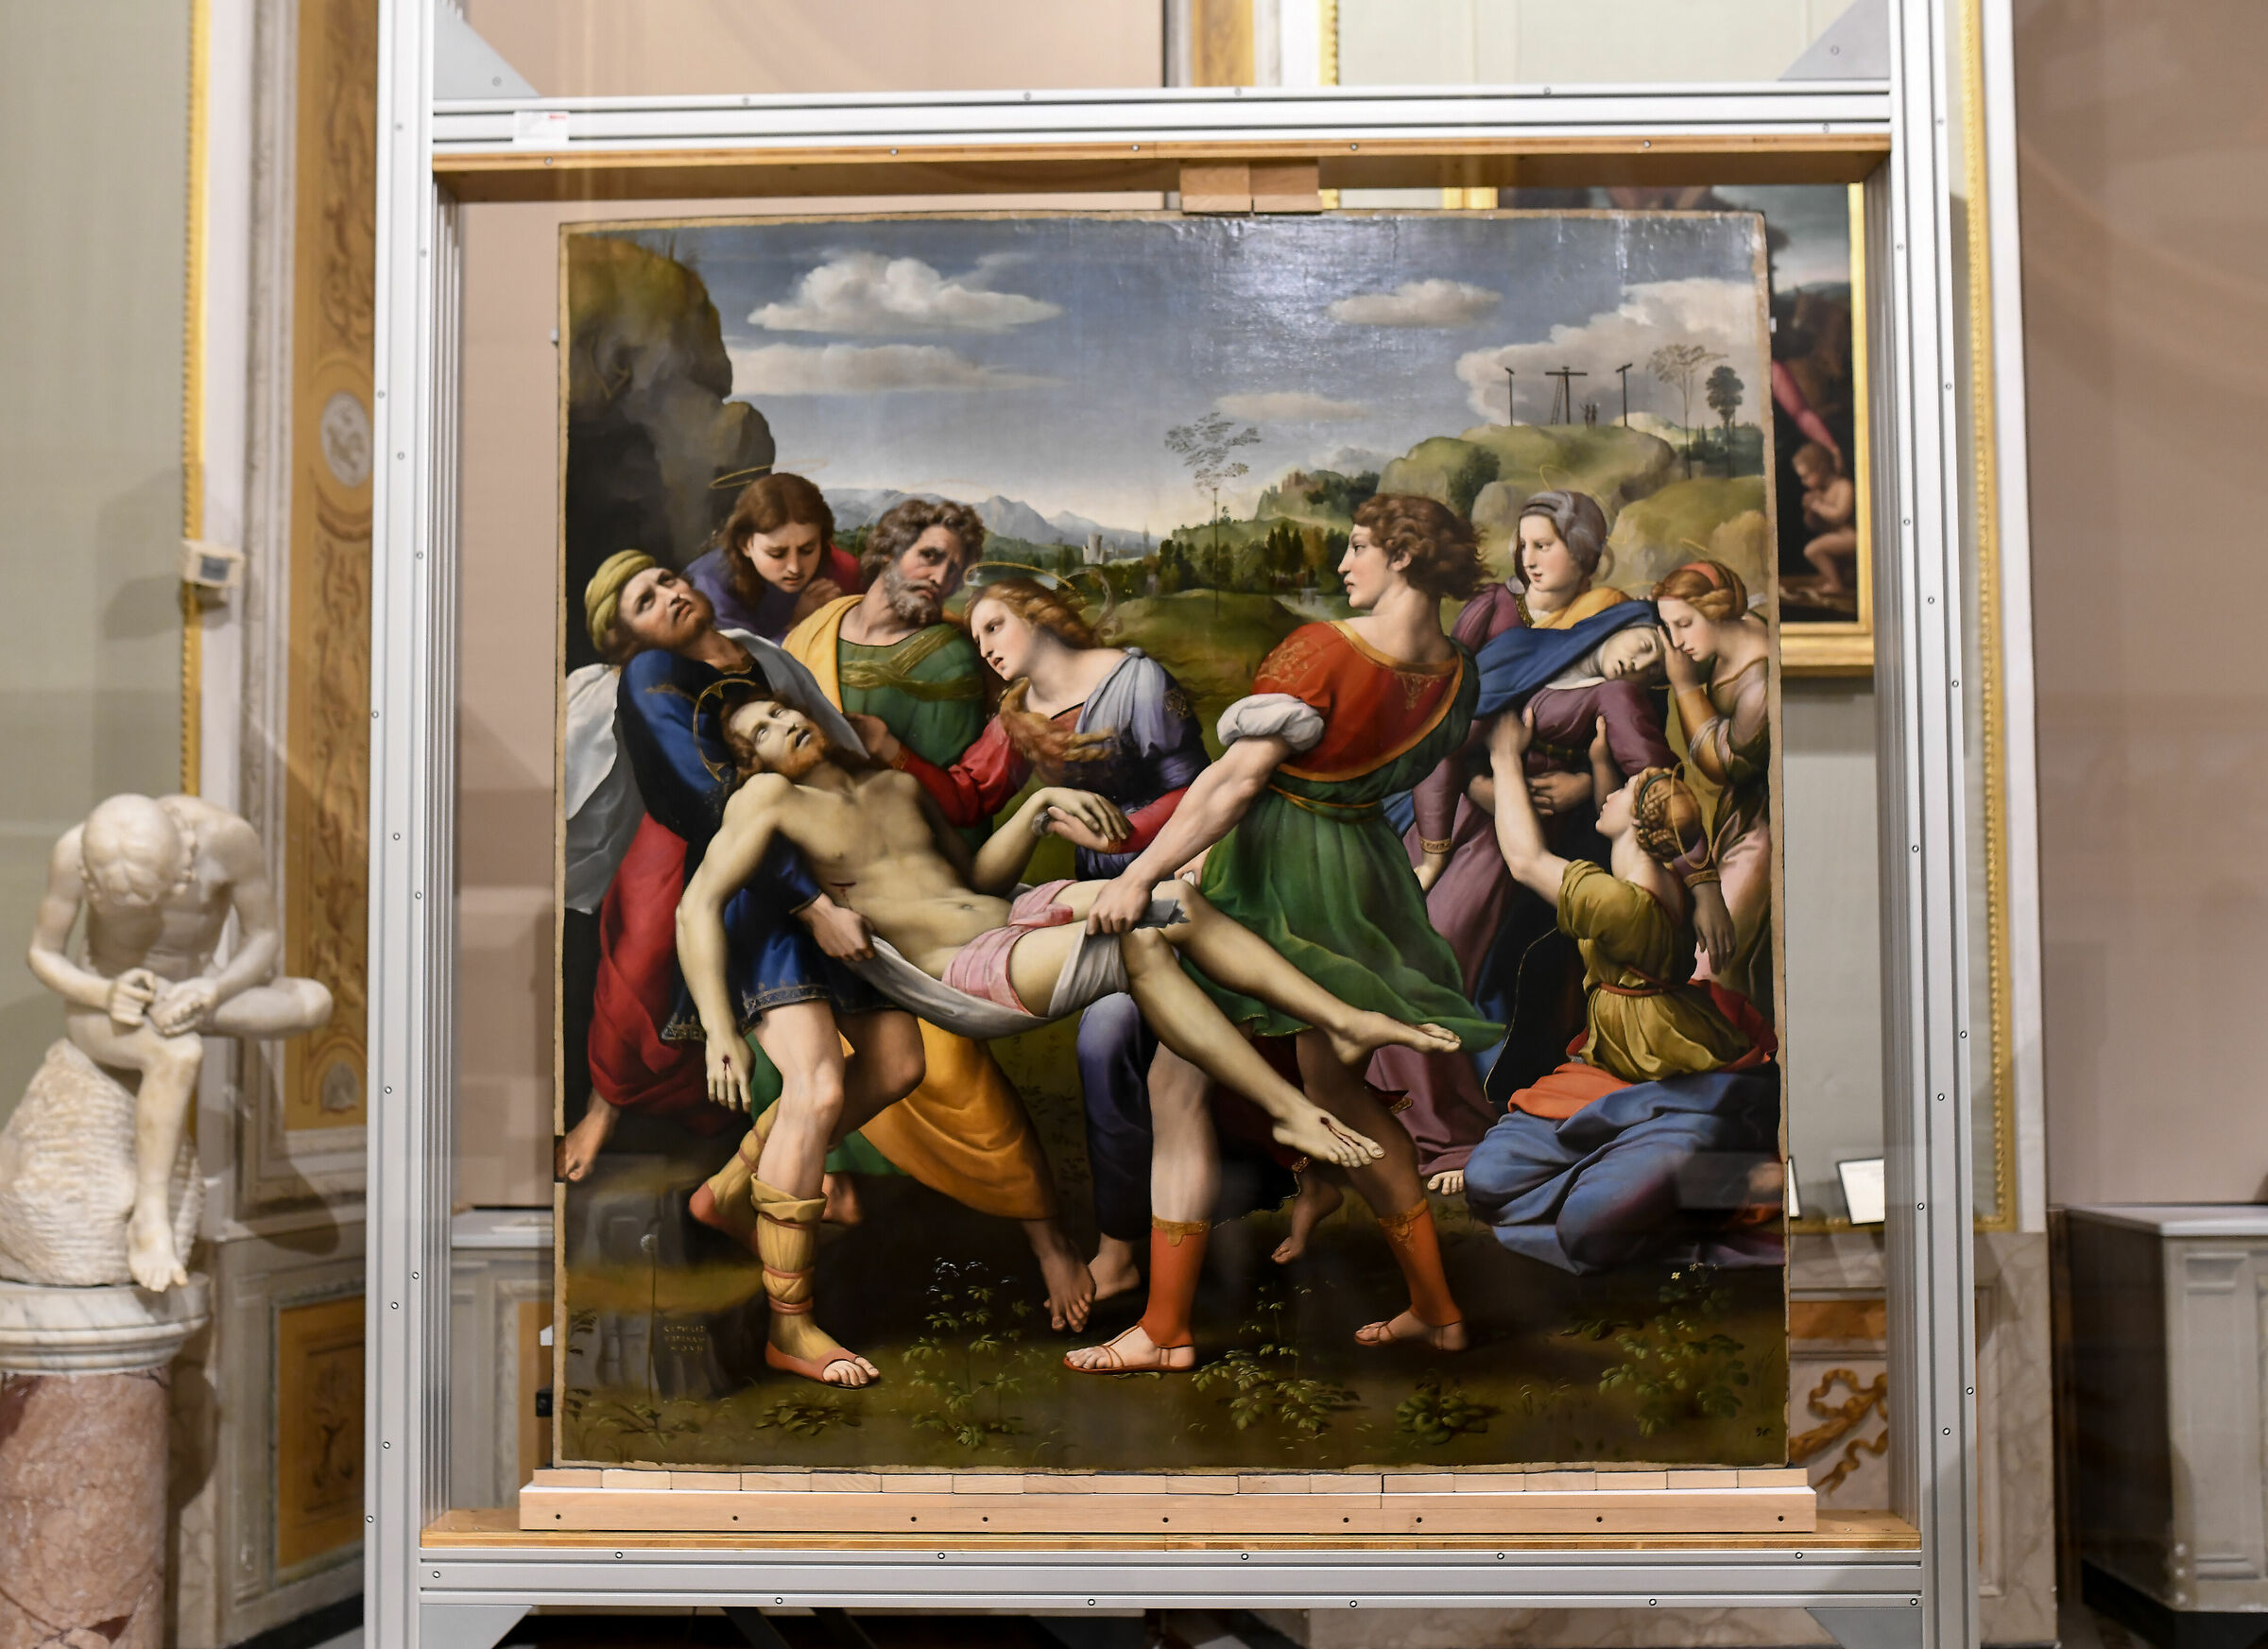 Borghese-Raffaello Gallery, "Deposition of Christ"...